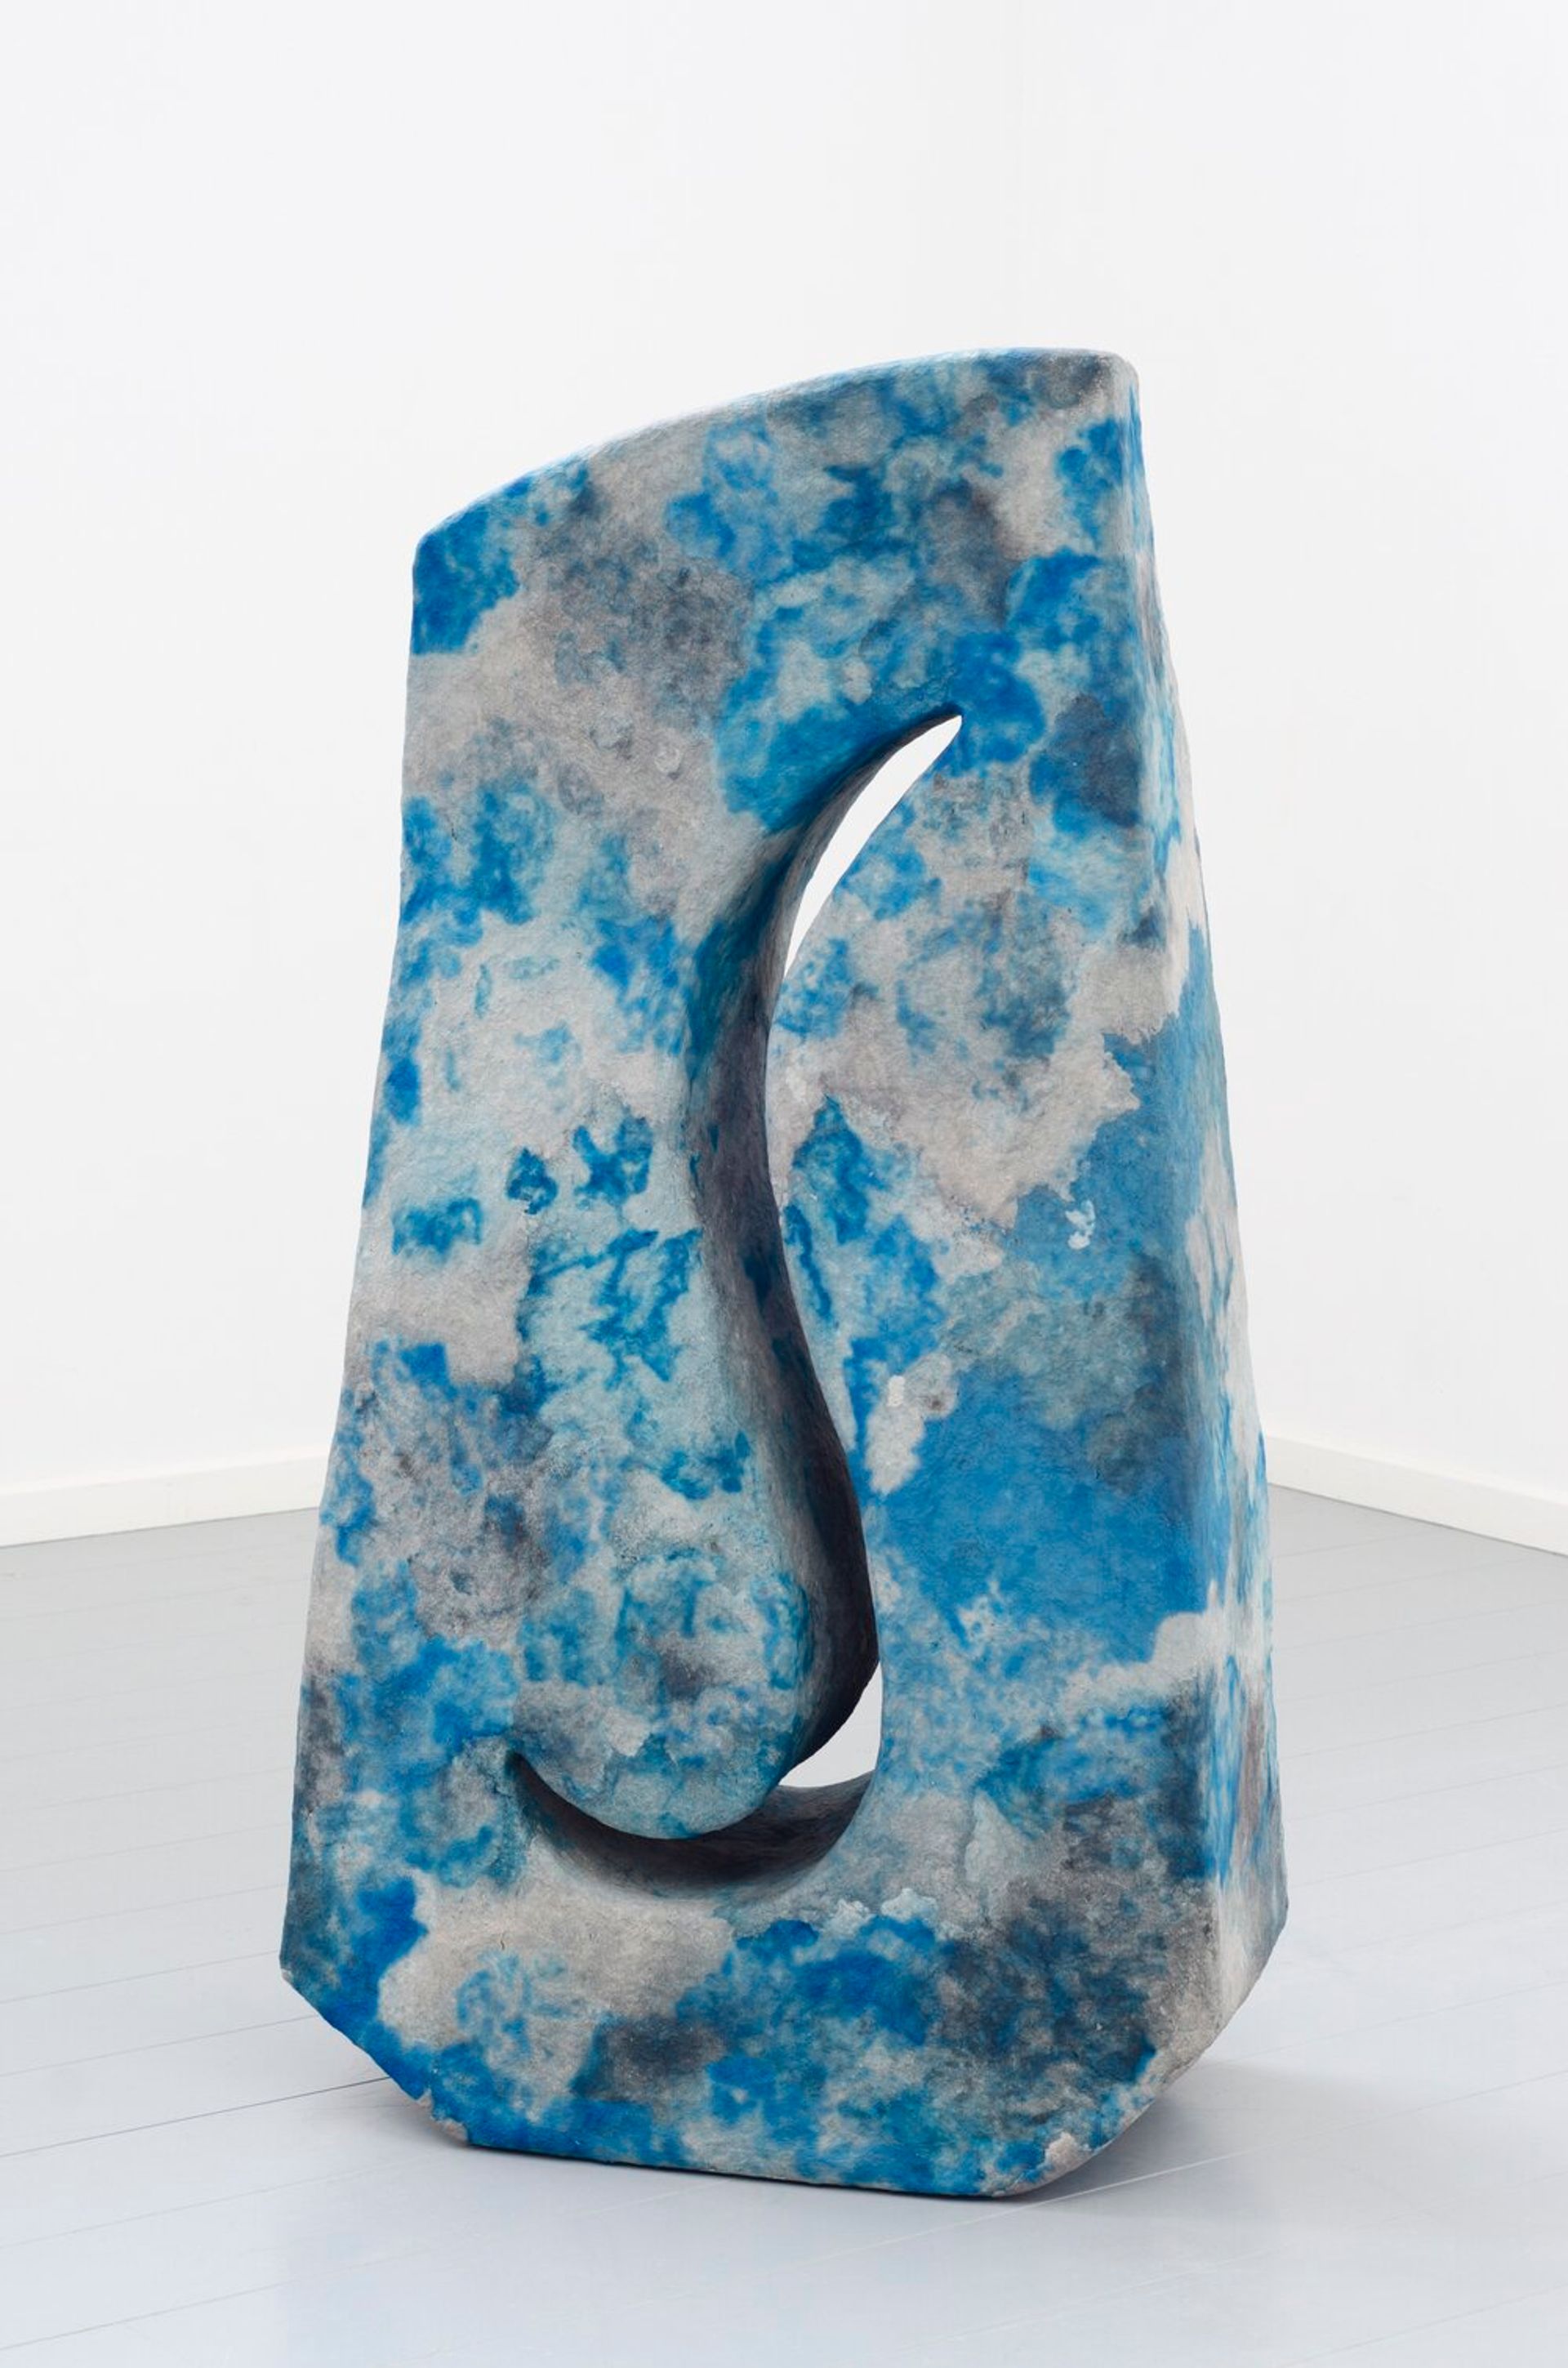 Ana Navas, Object for backdrop, 2014, styrofoam and paper maché, 90 × 150 × 60 cm